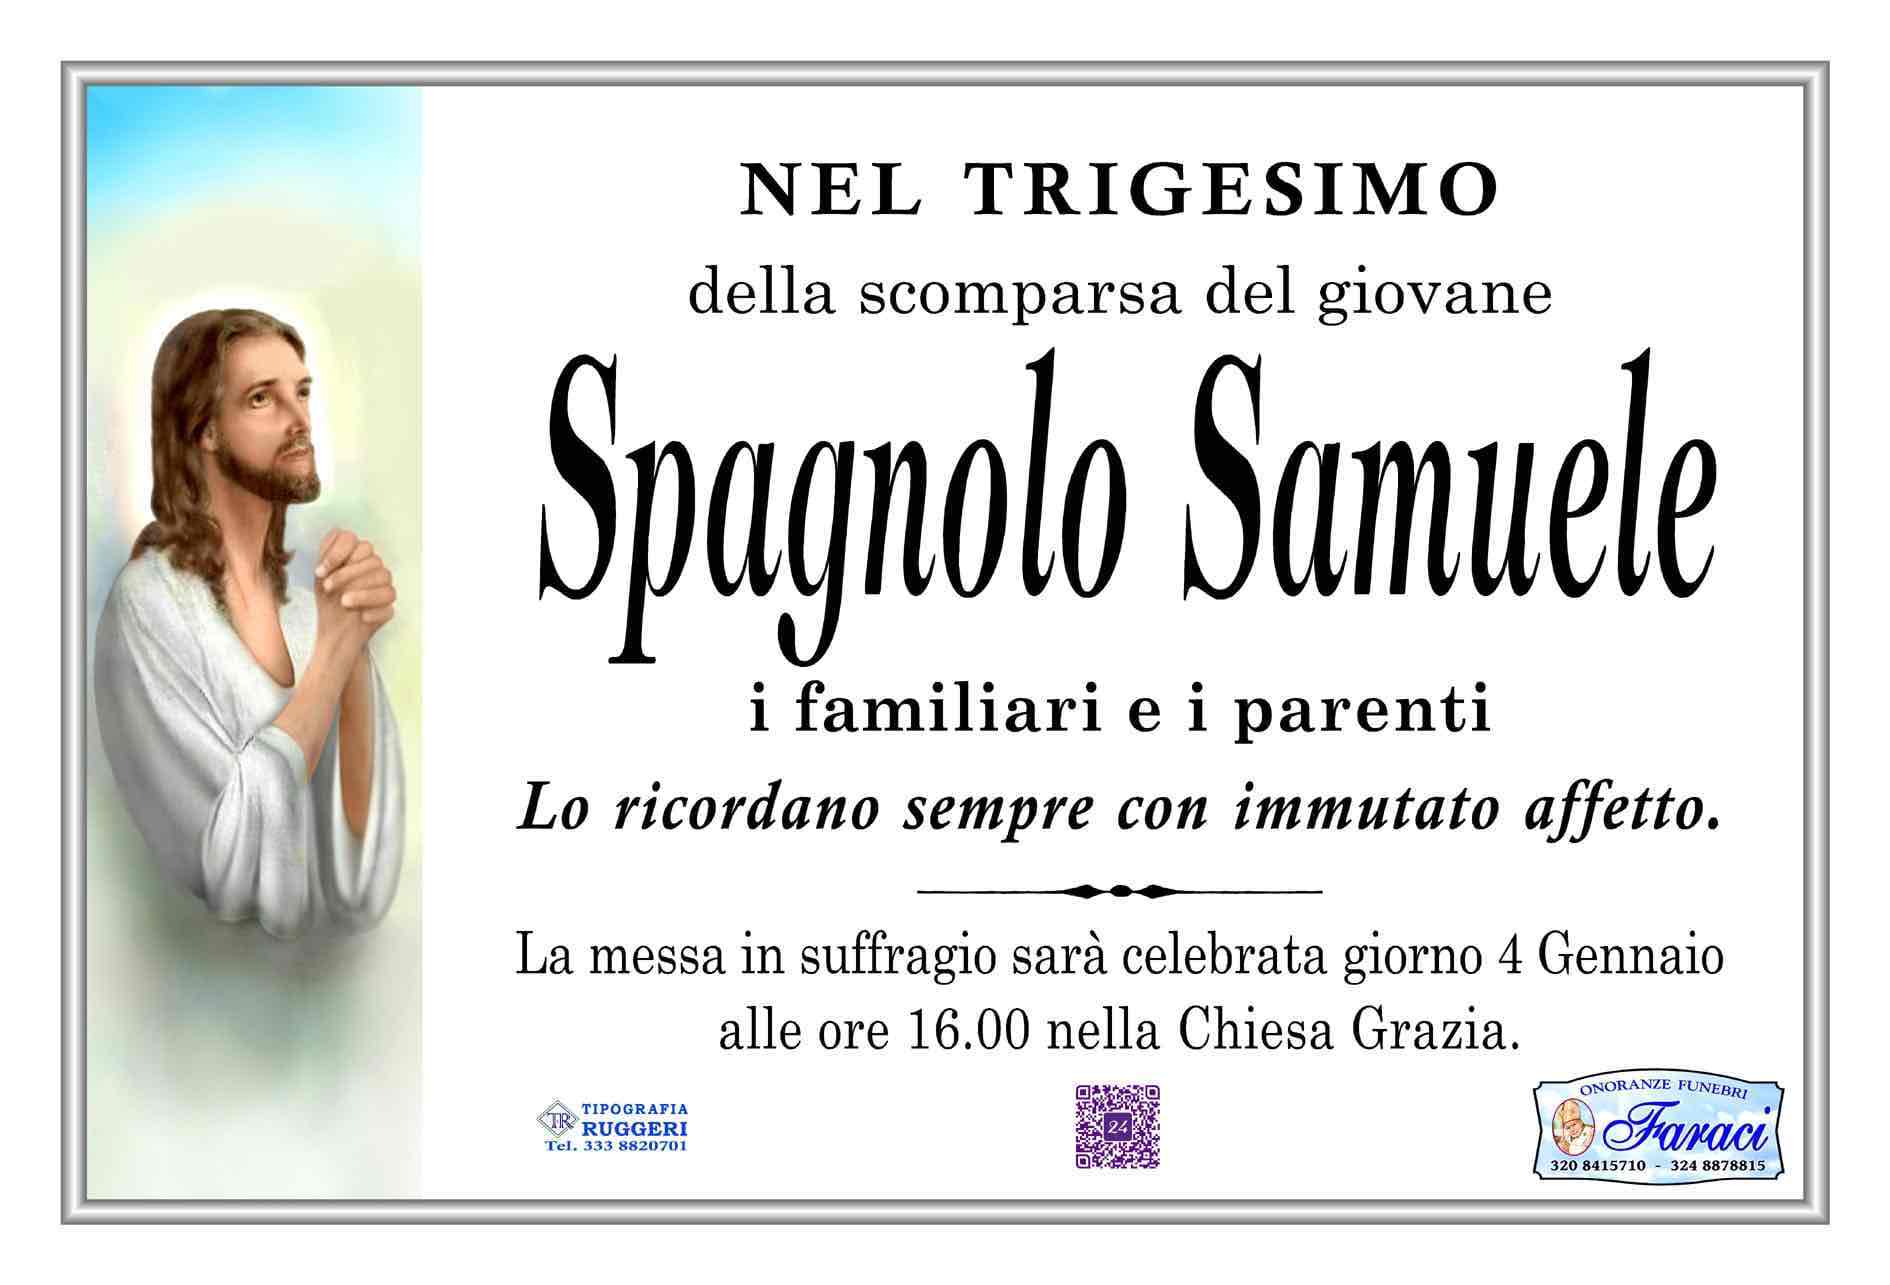 Samuele Spagnolo